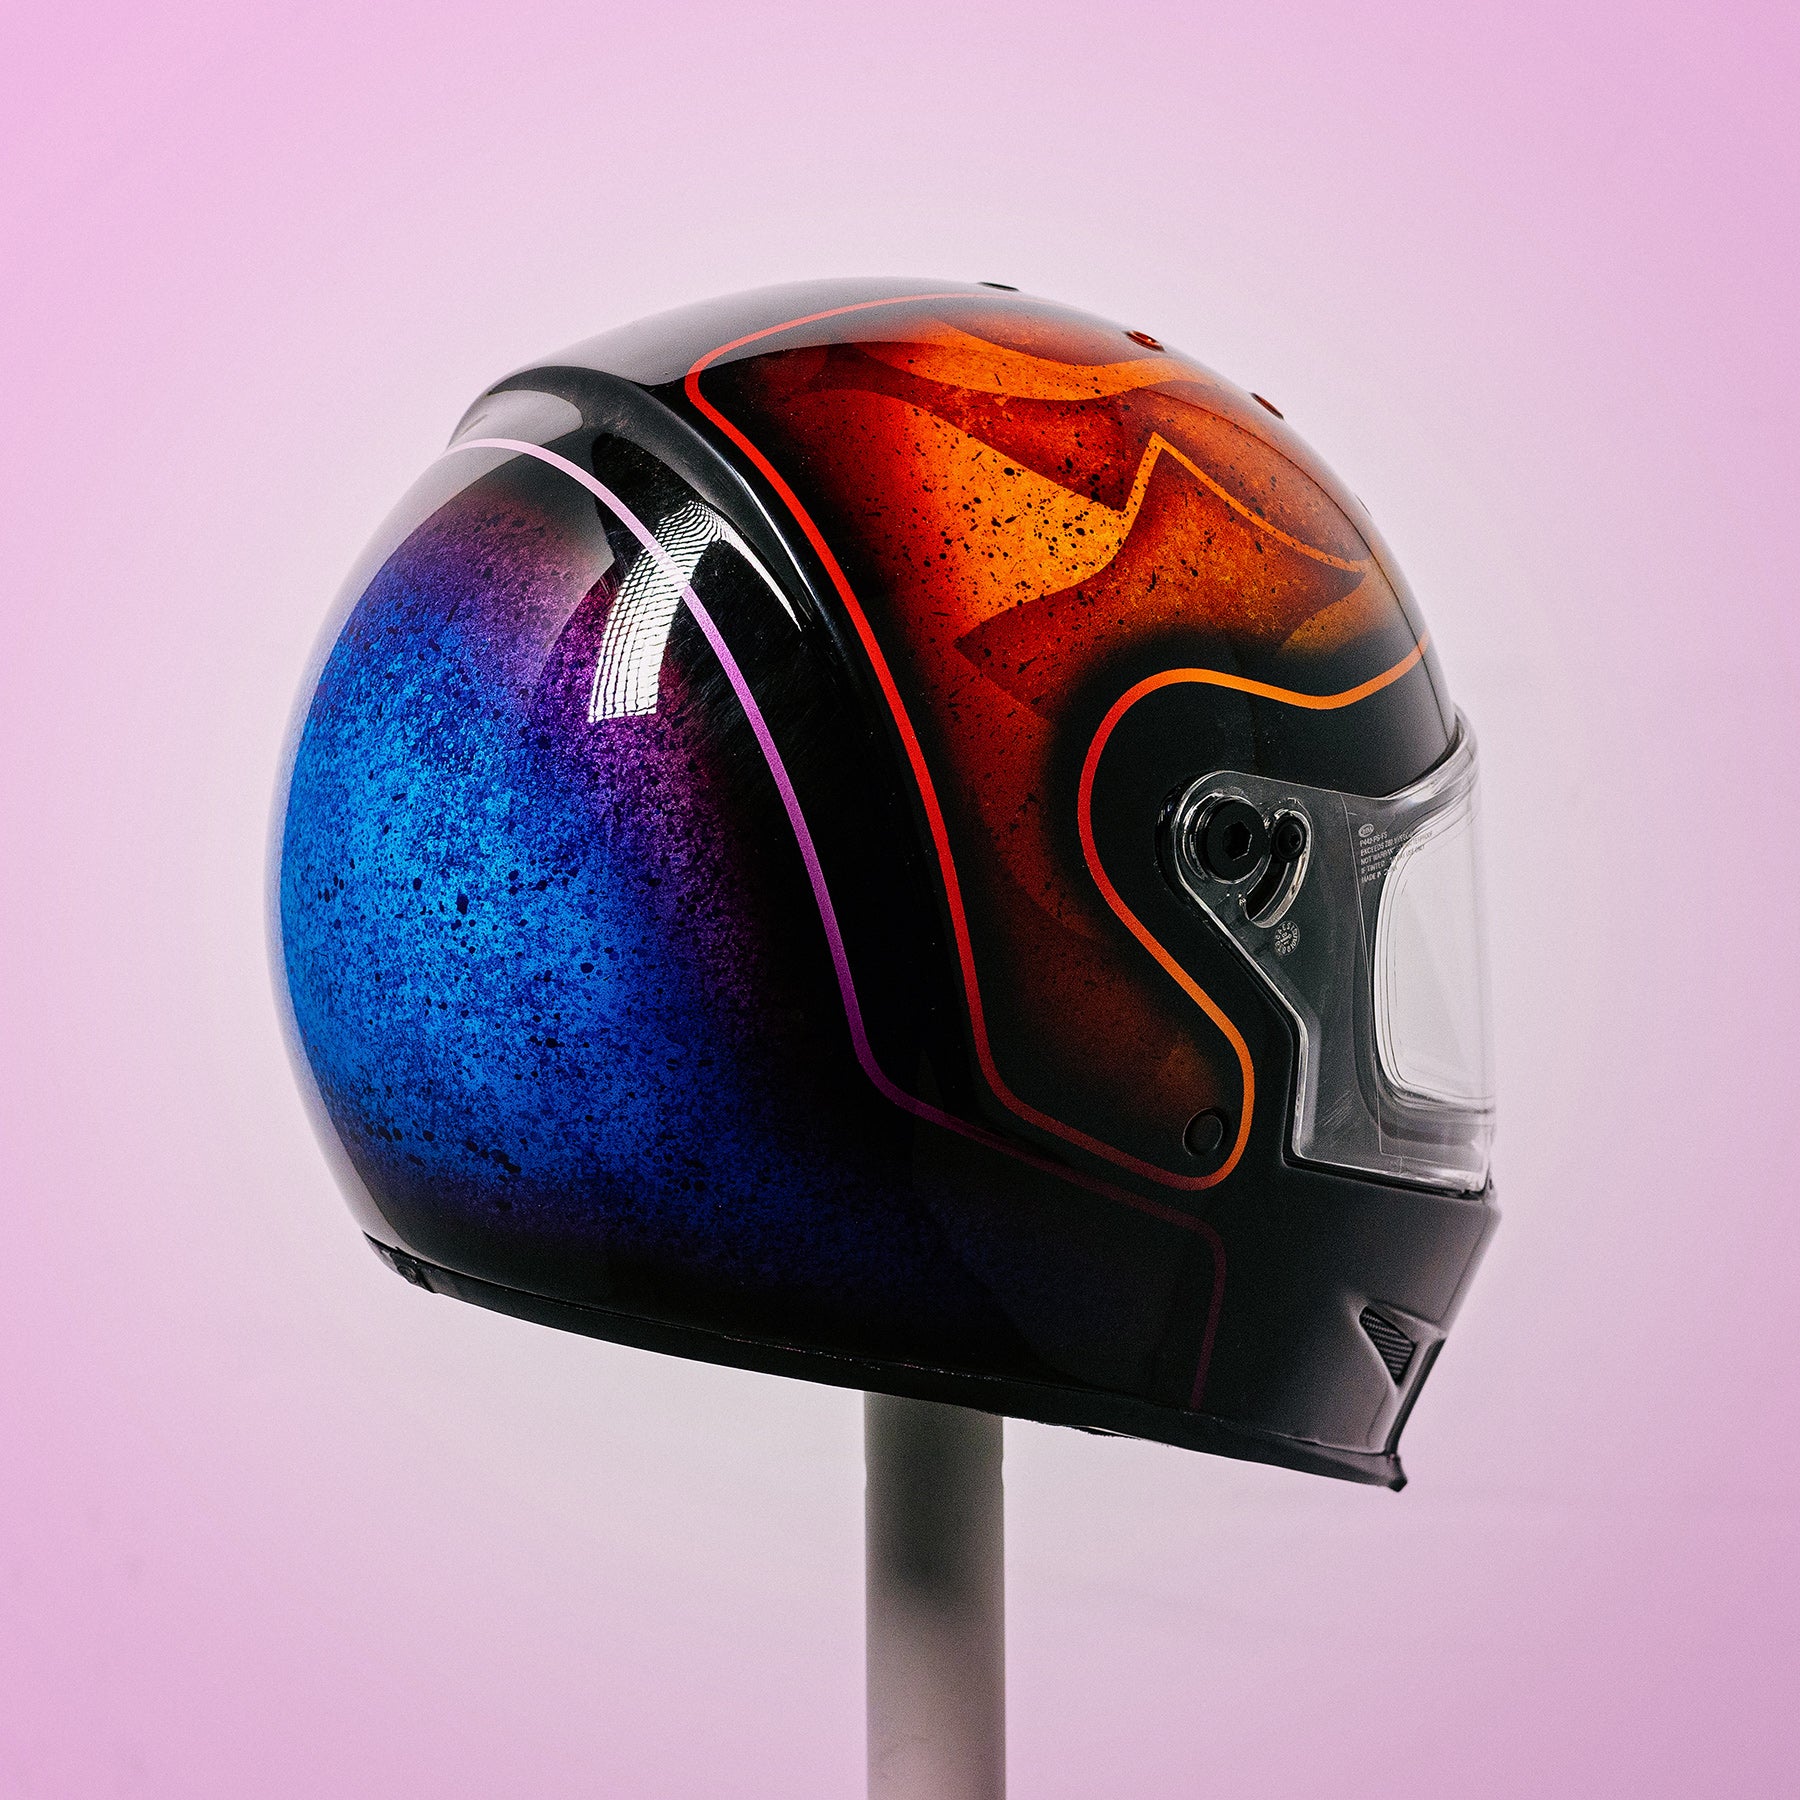 Trippy Ten helmet art show Pittsburgh Glory Daze motorcycle show Bell Helmets Barry Hooper